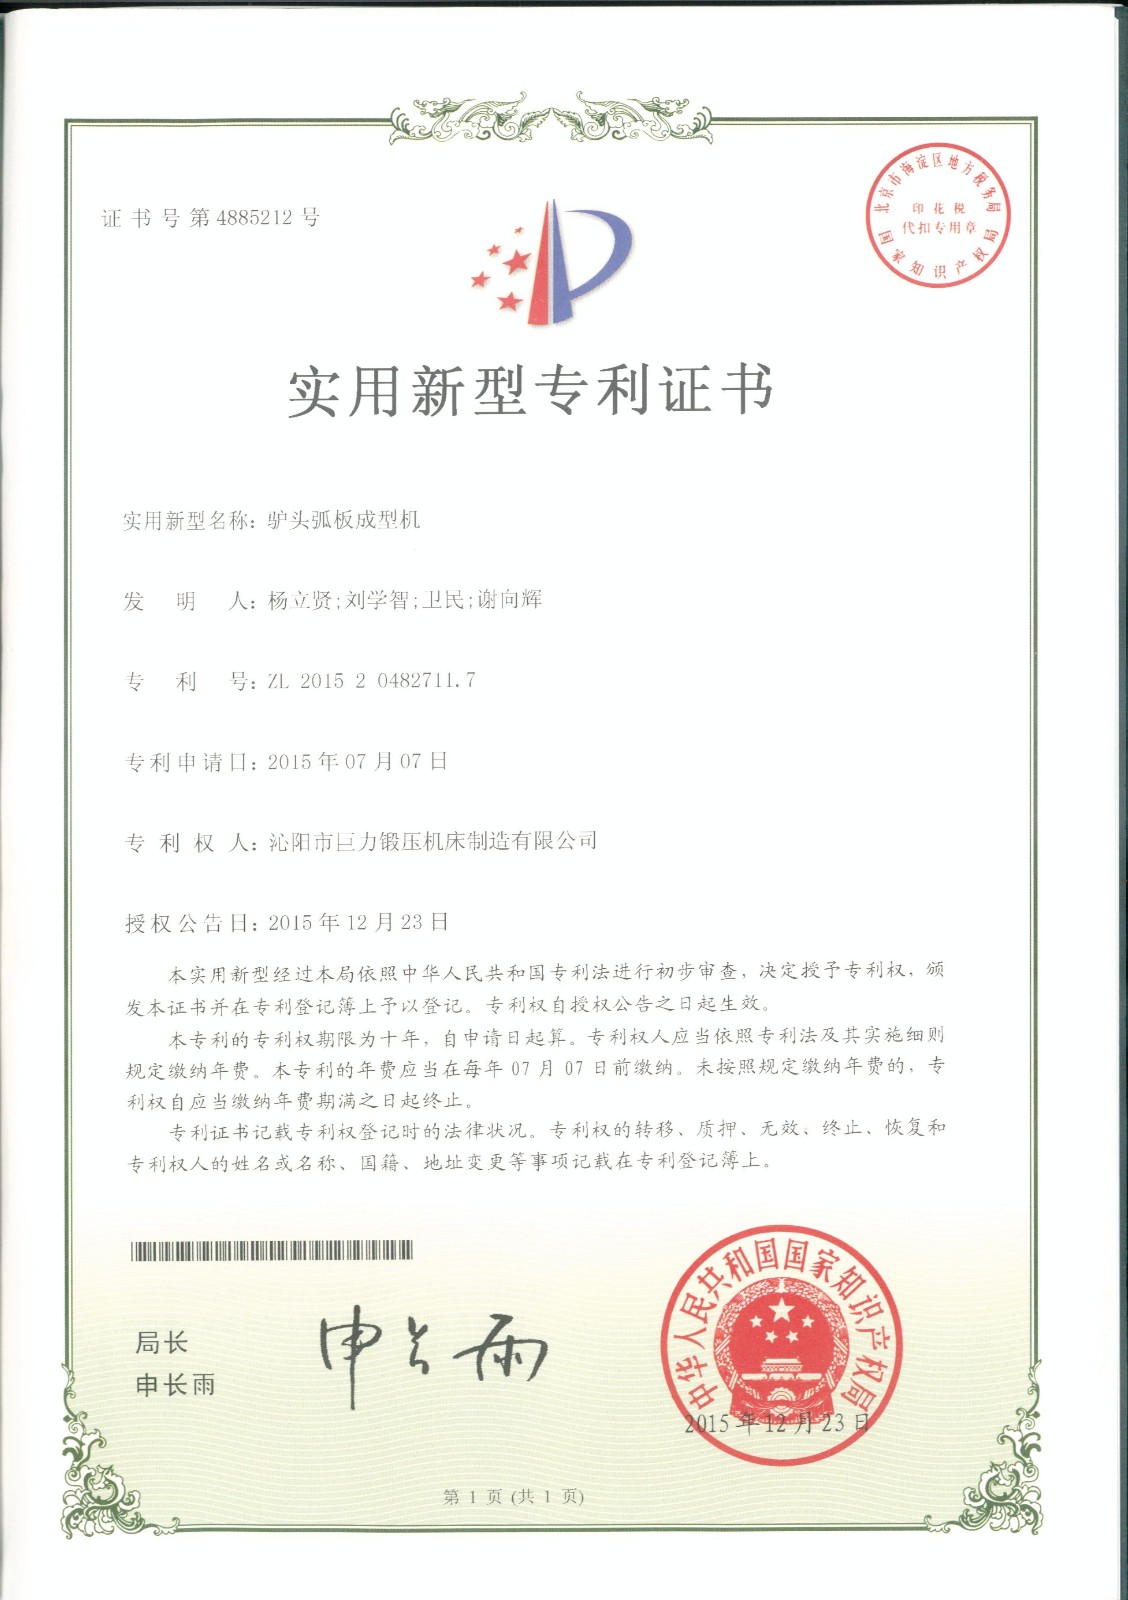 Shantou arc plate forming machine utility model patent certificate